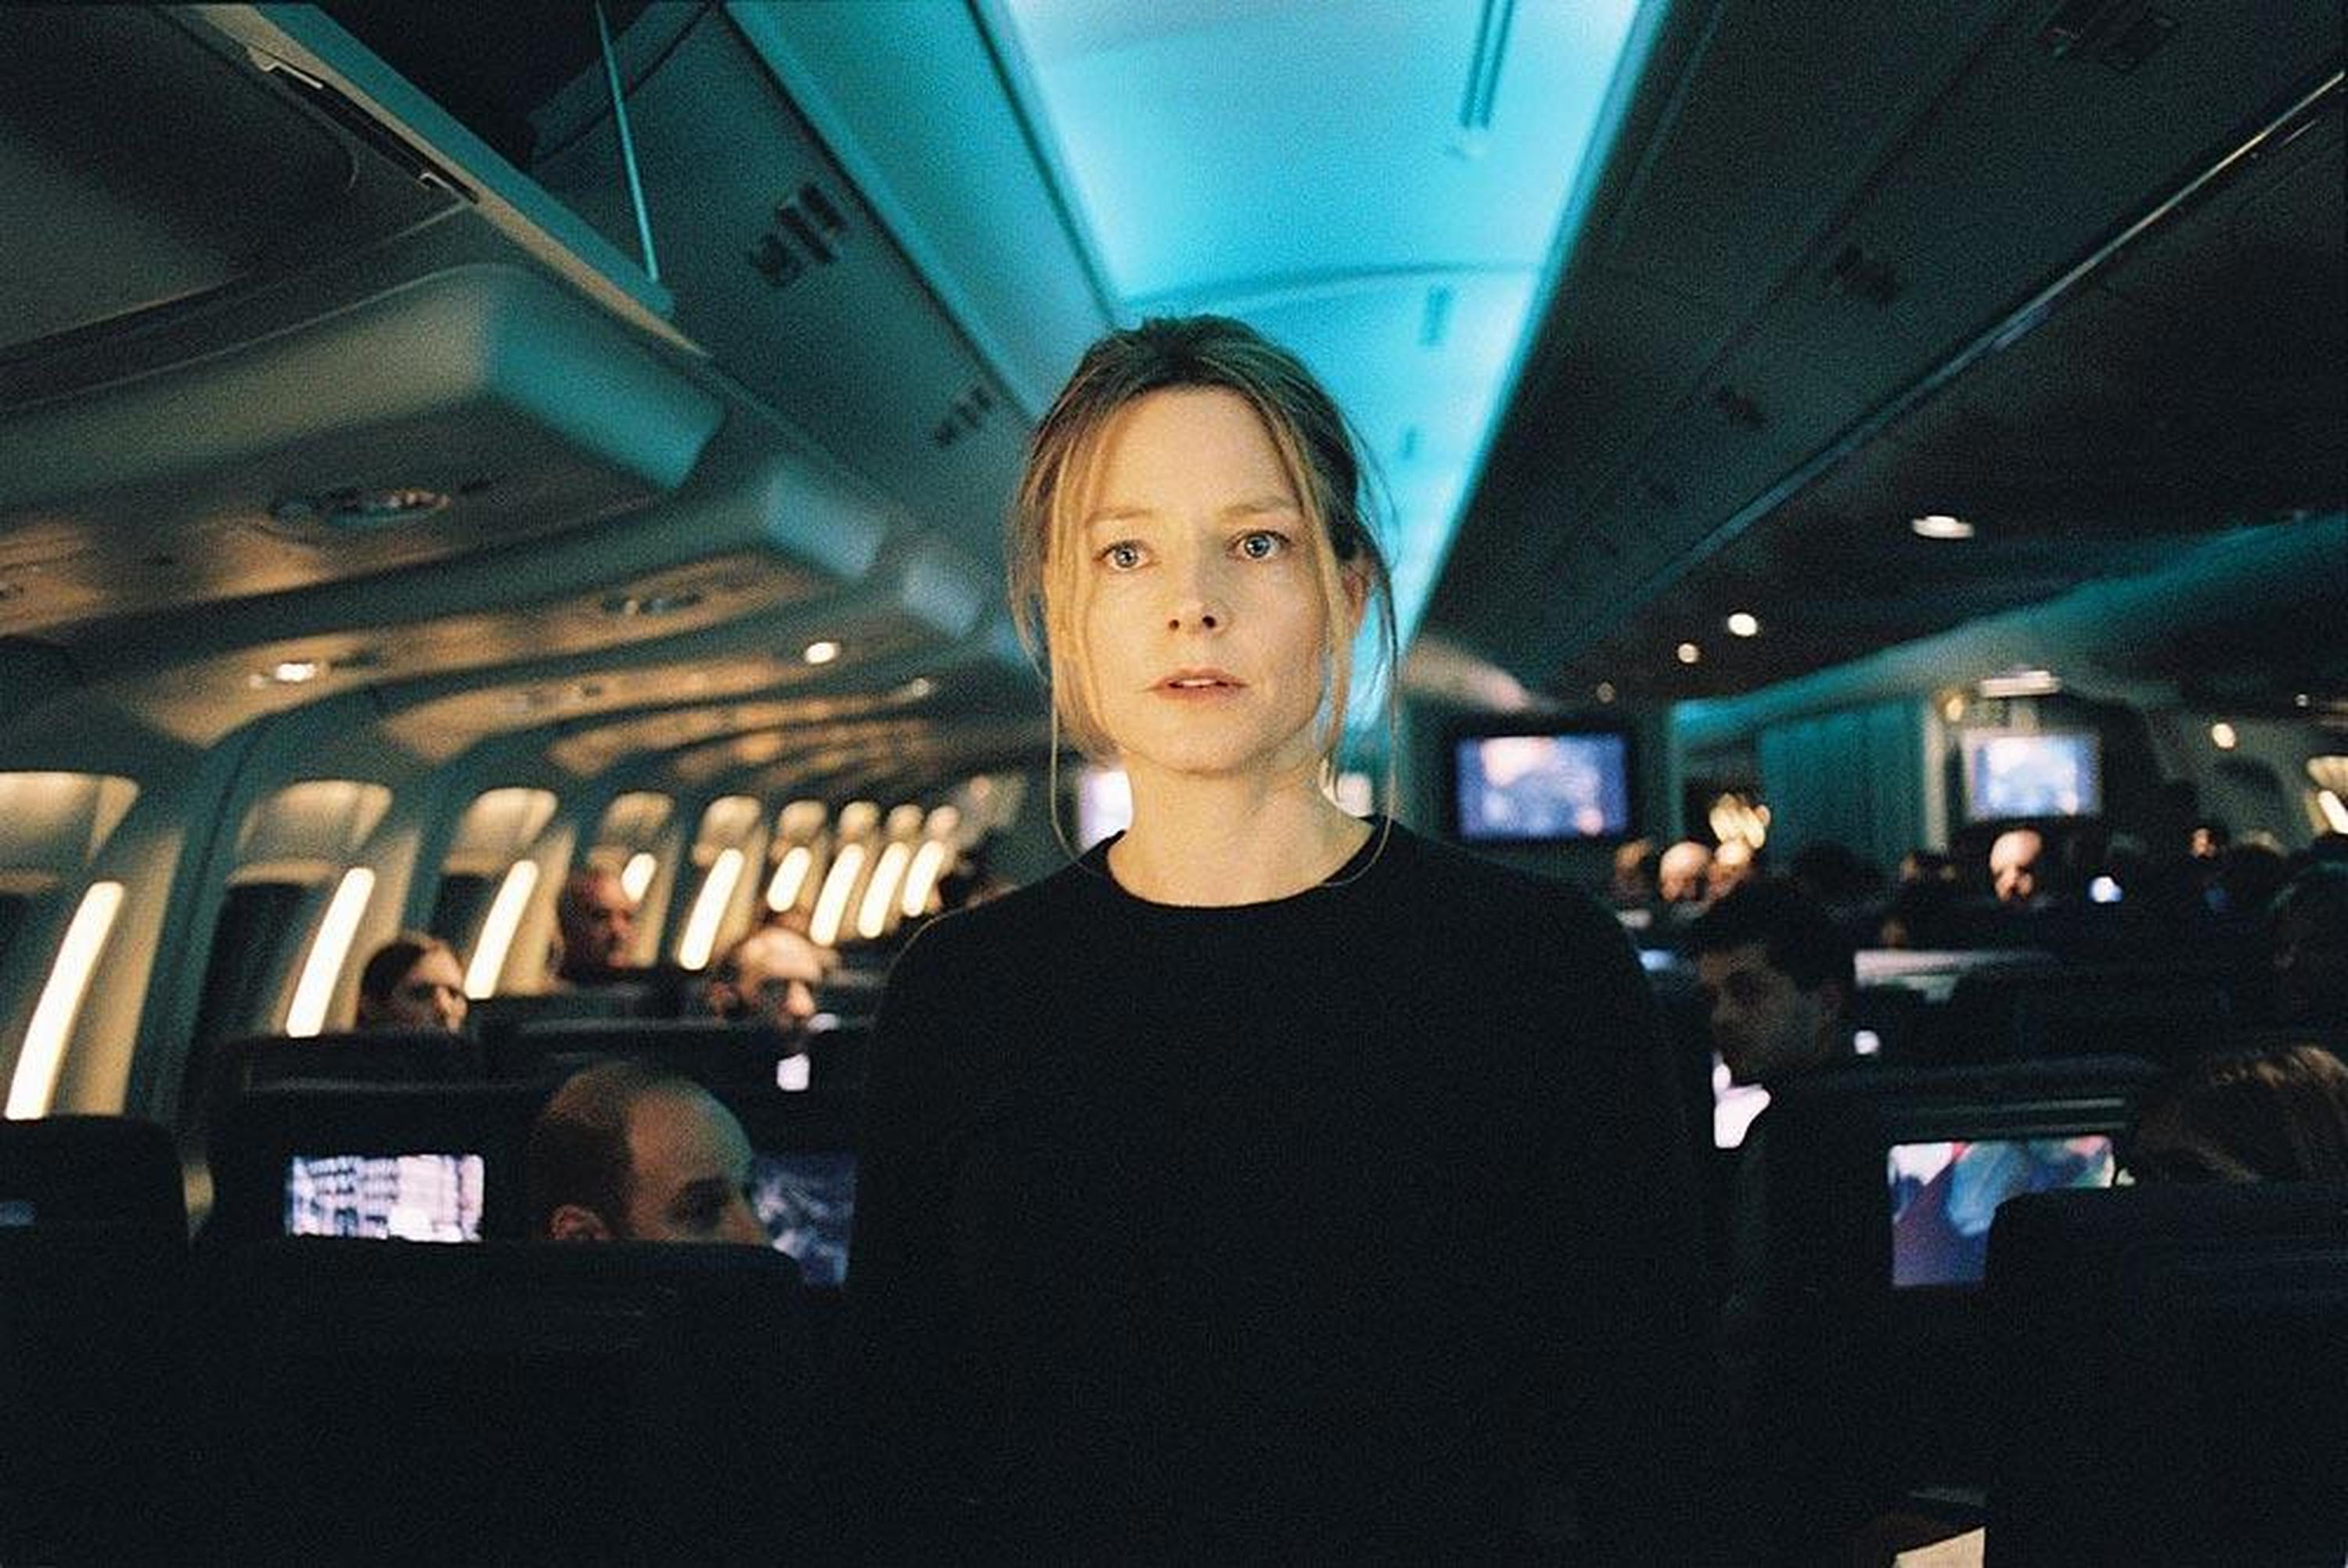 Top17：《空中危机》 (2005)  朱迪·福斯特主演，故事发生在飞行的飞机上，朱迪发现自己6岁的女儿在飞机上凭空失踪了。巧合的是她正是飞机的设计者，于是她带领观众揭开飞机每一个内部构造，也揭开了一个惊天阴谋。